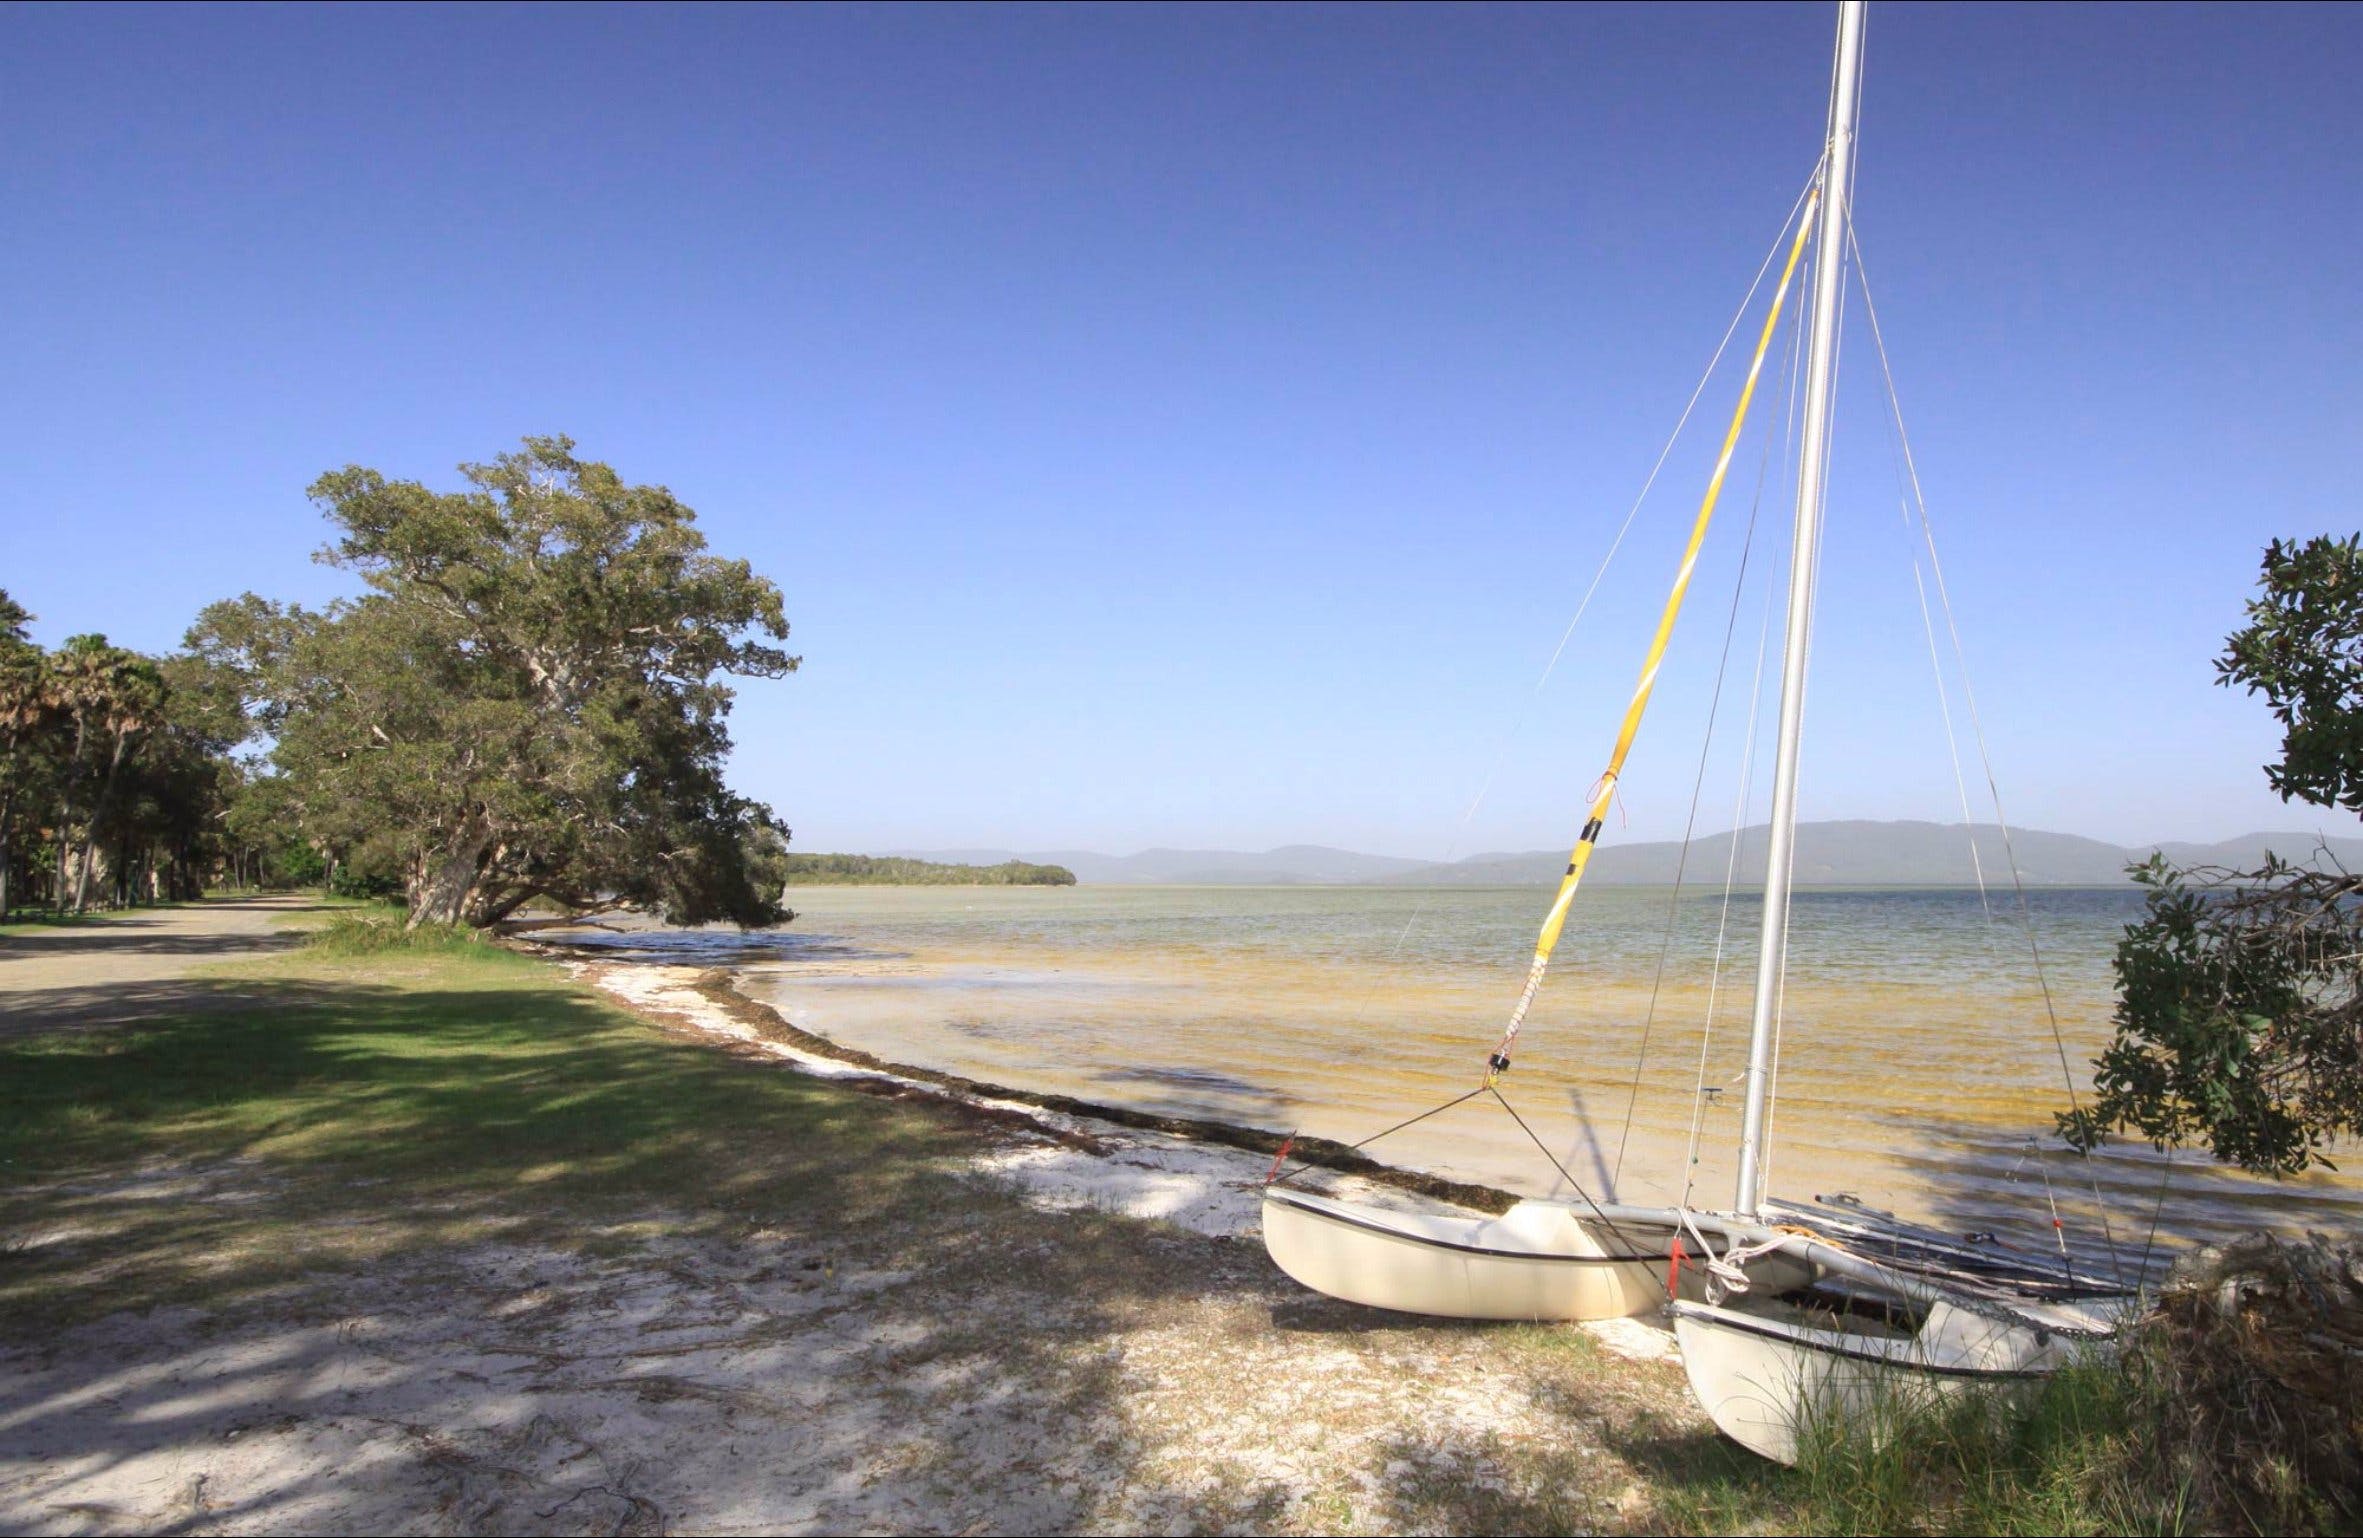 Sailing Club picnic area - Australia Accommodation